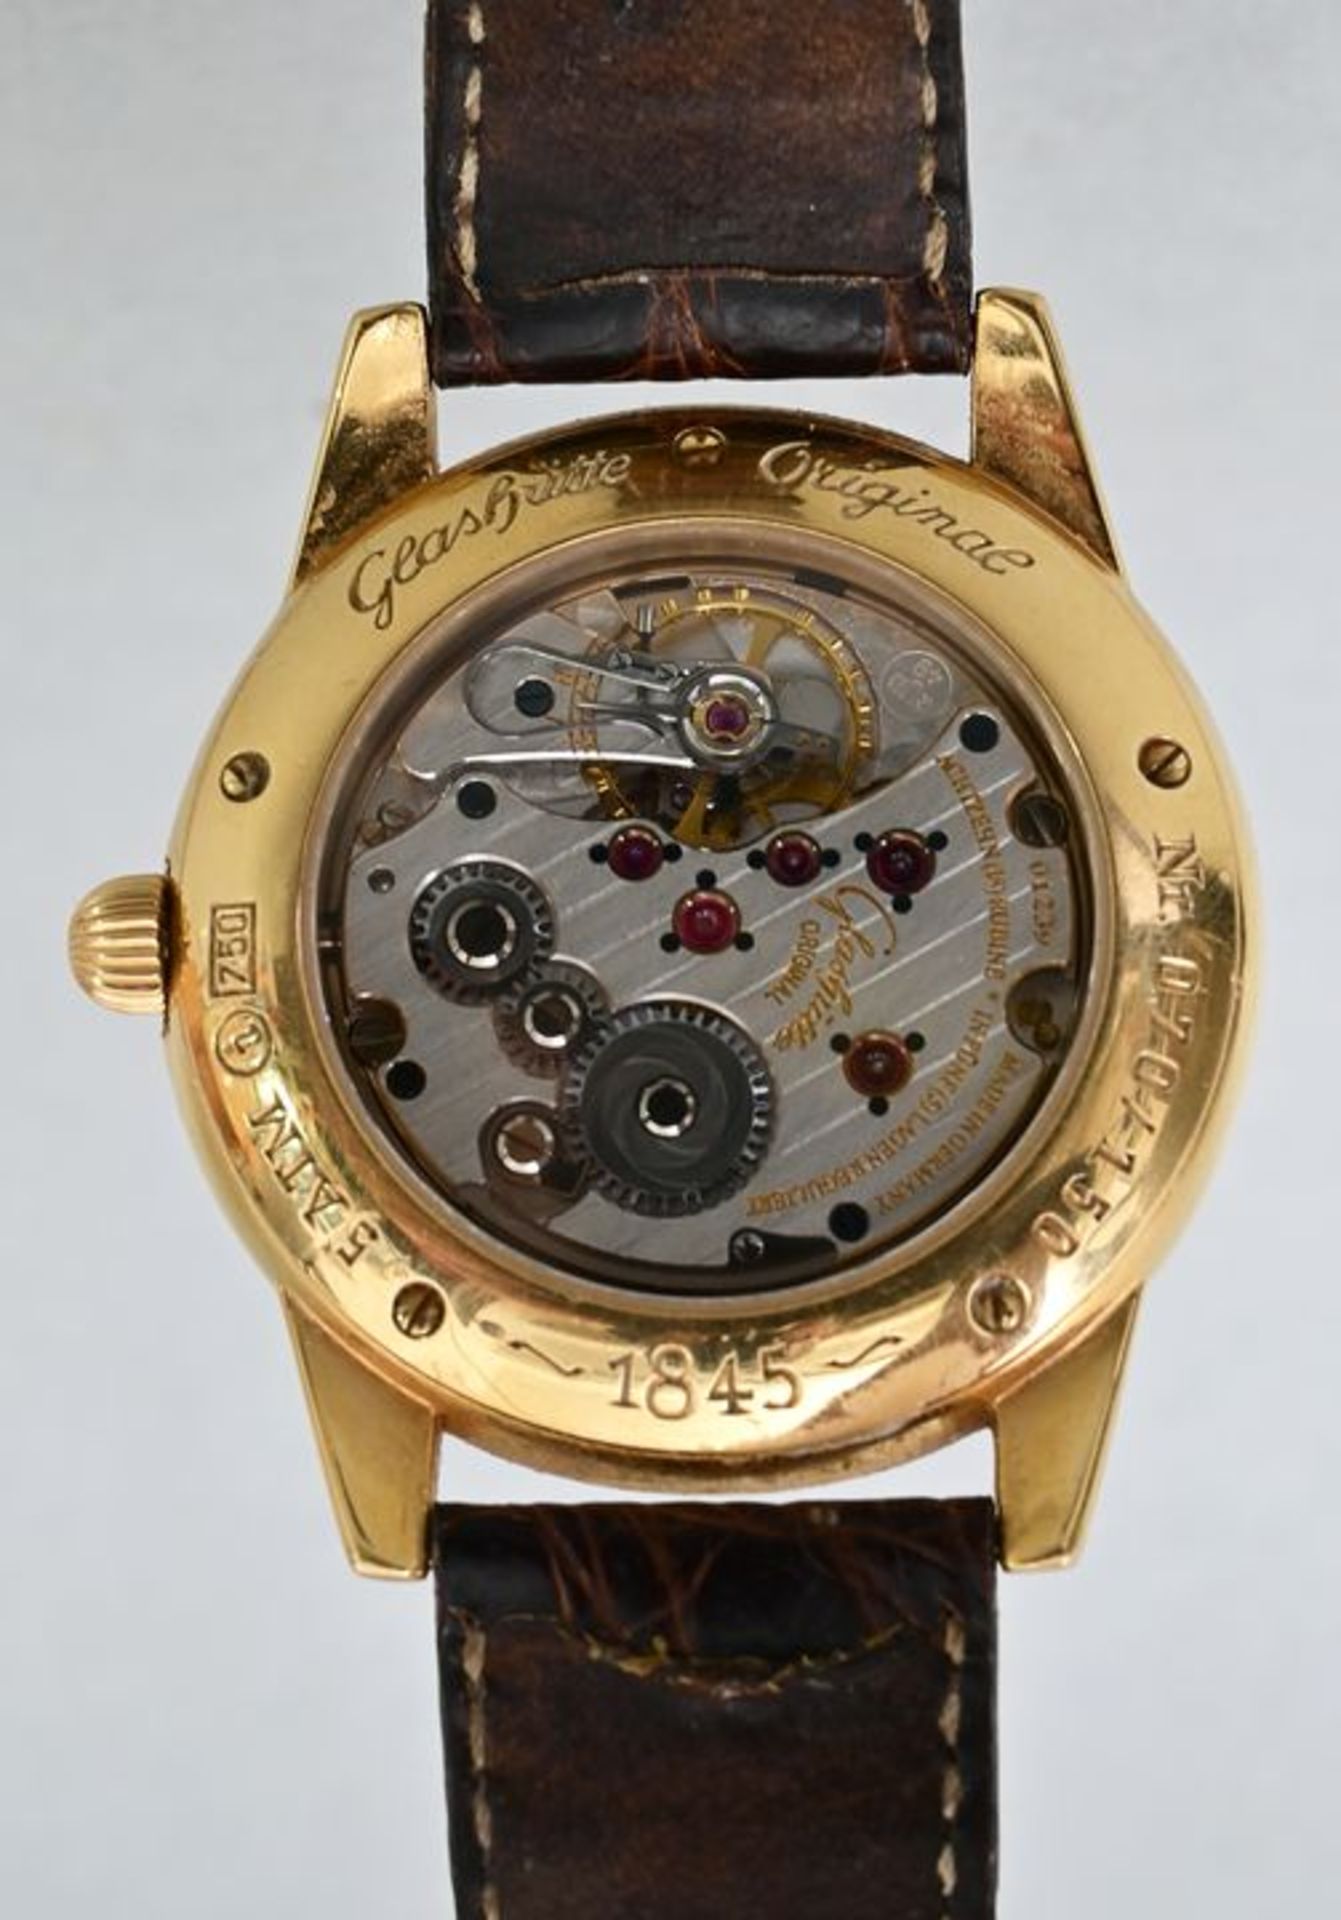 Gold-Armbanduhr Glashütte/ Glashütte wristwatch - Image 5 of 5